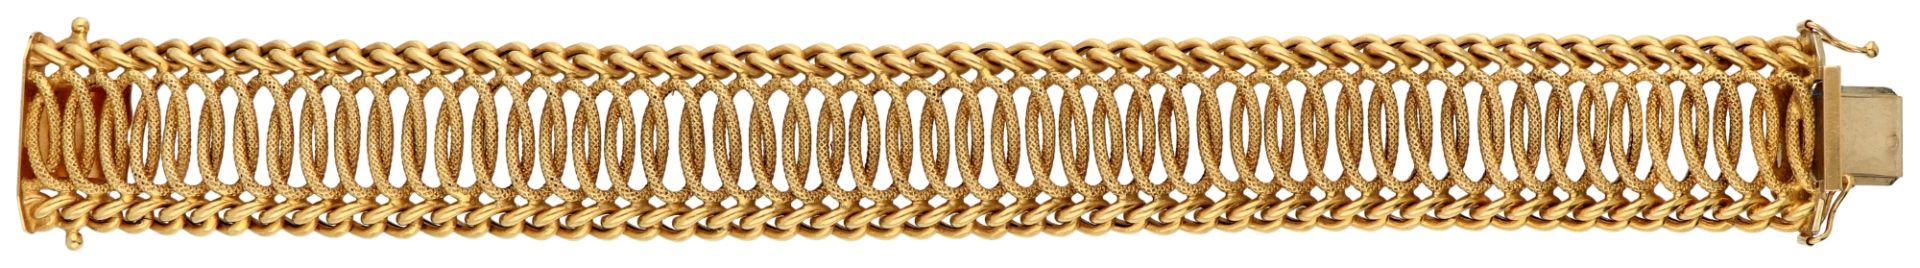 UnoAErre 18K yellow gold link bracelet. - Image 3 of 4